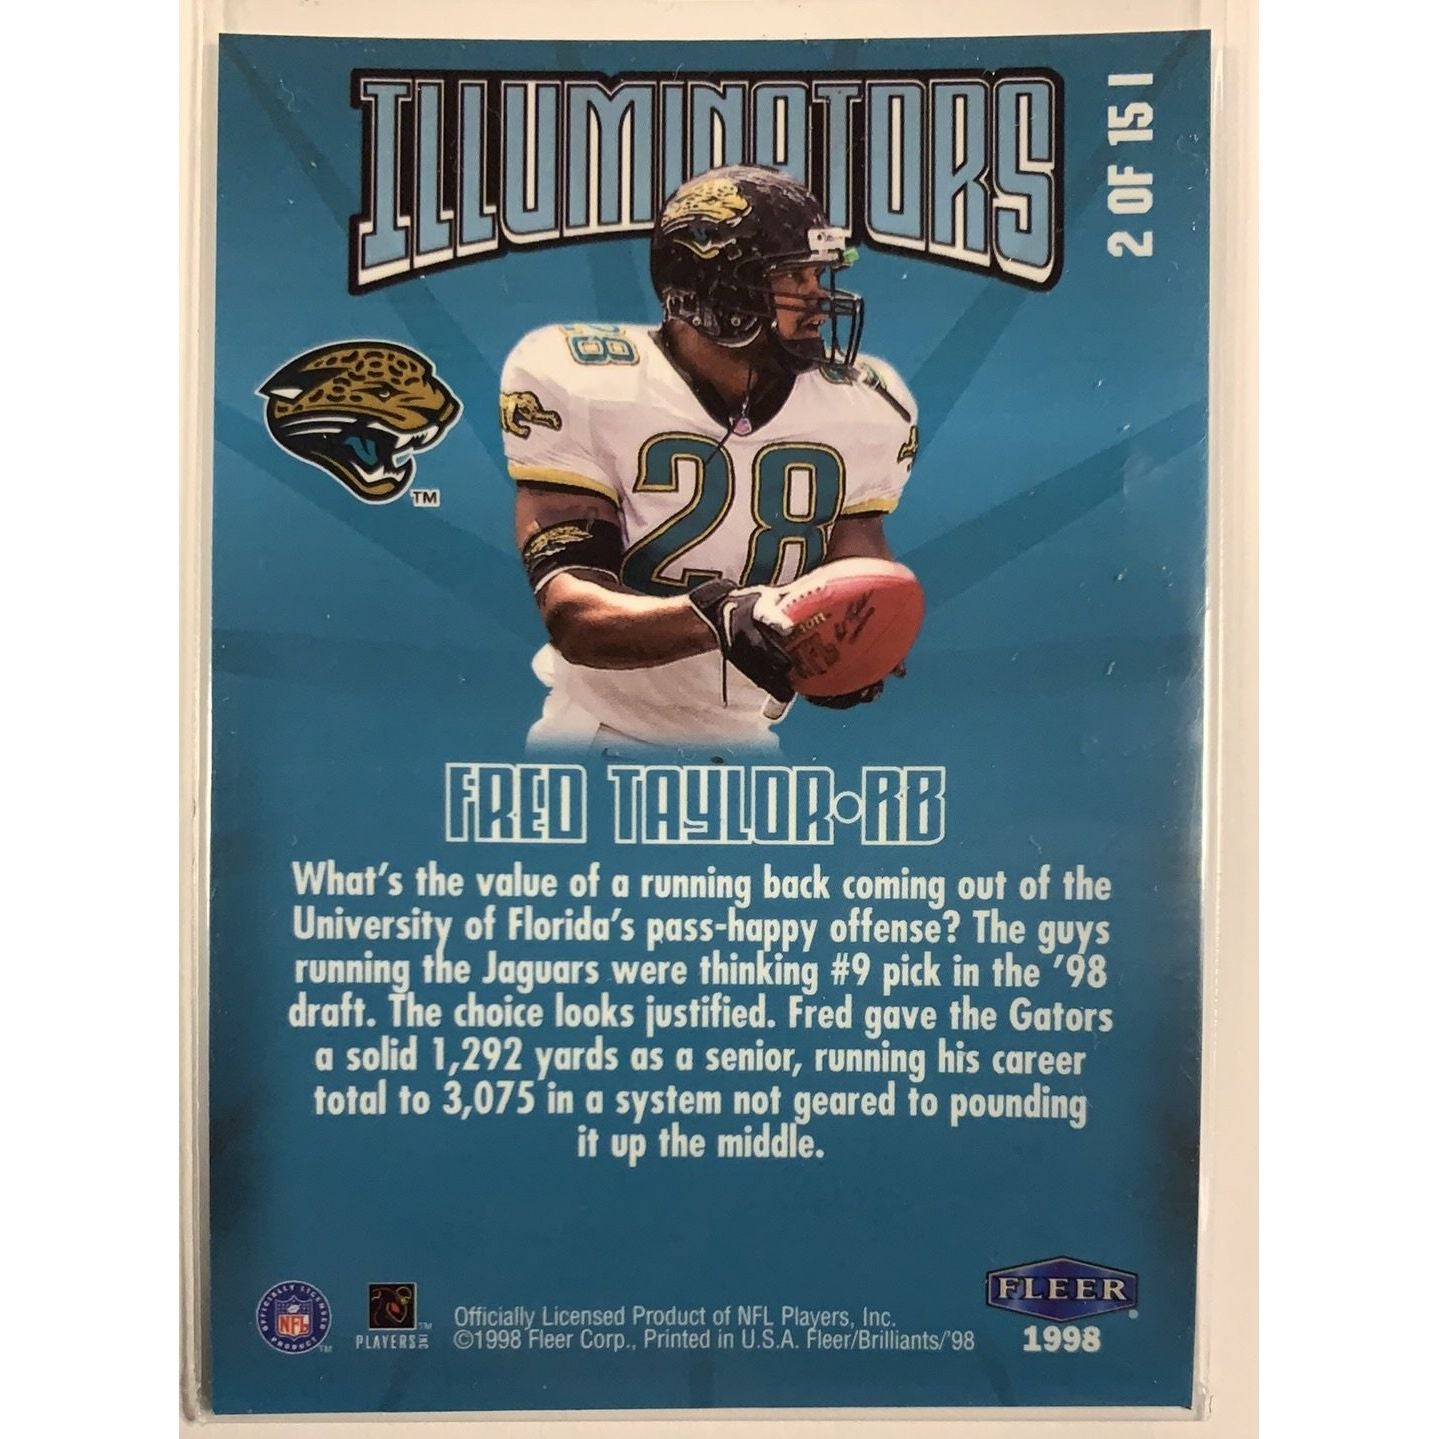  1998 Fleer Brilliants Fred Taylor Illuminators  Local Legends Cards & Collectibles